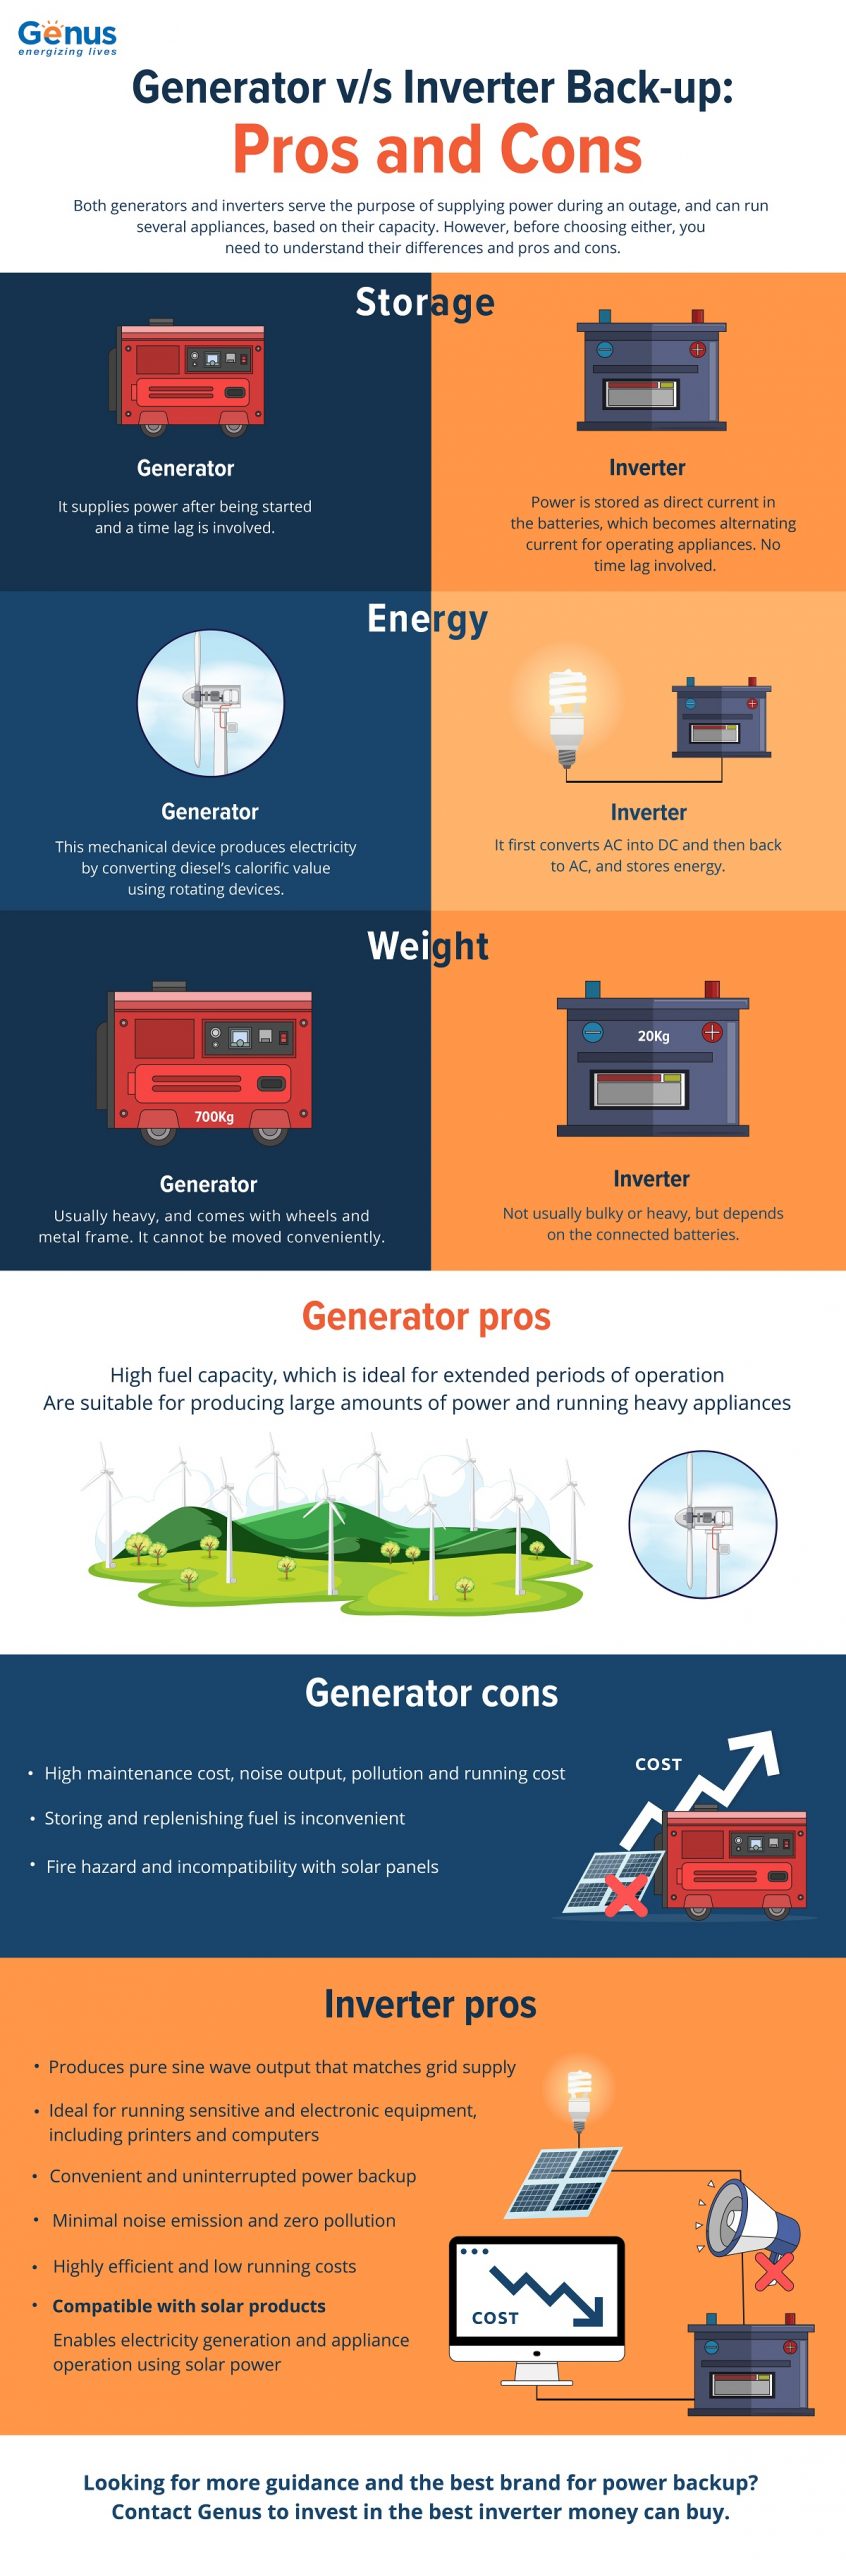 Generator vs Inverter Backup pro and cons